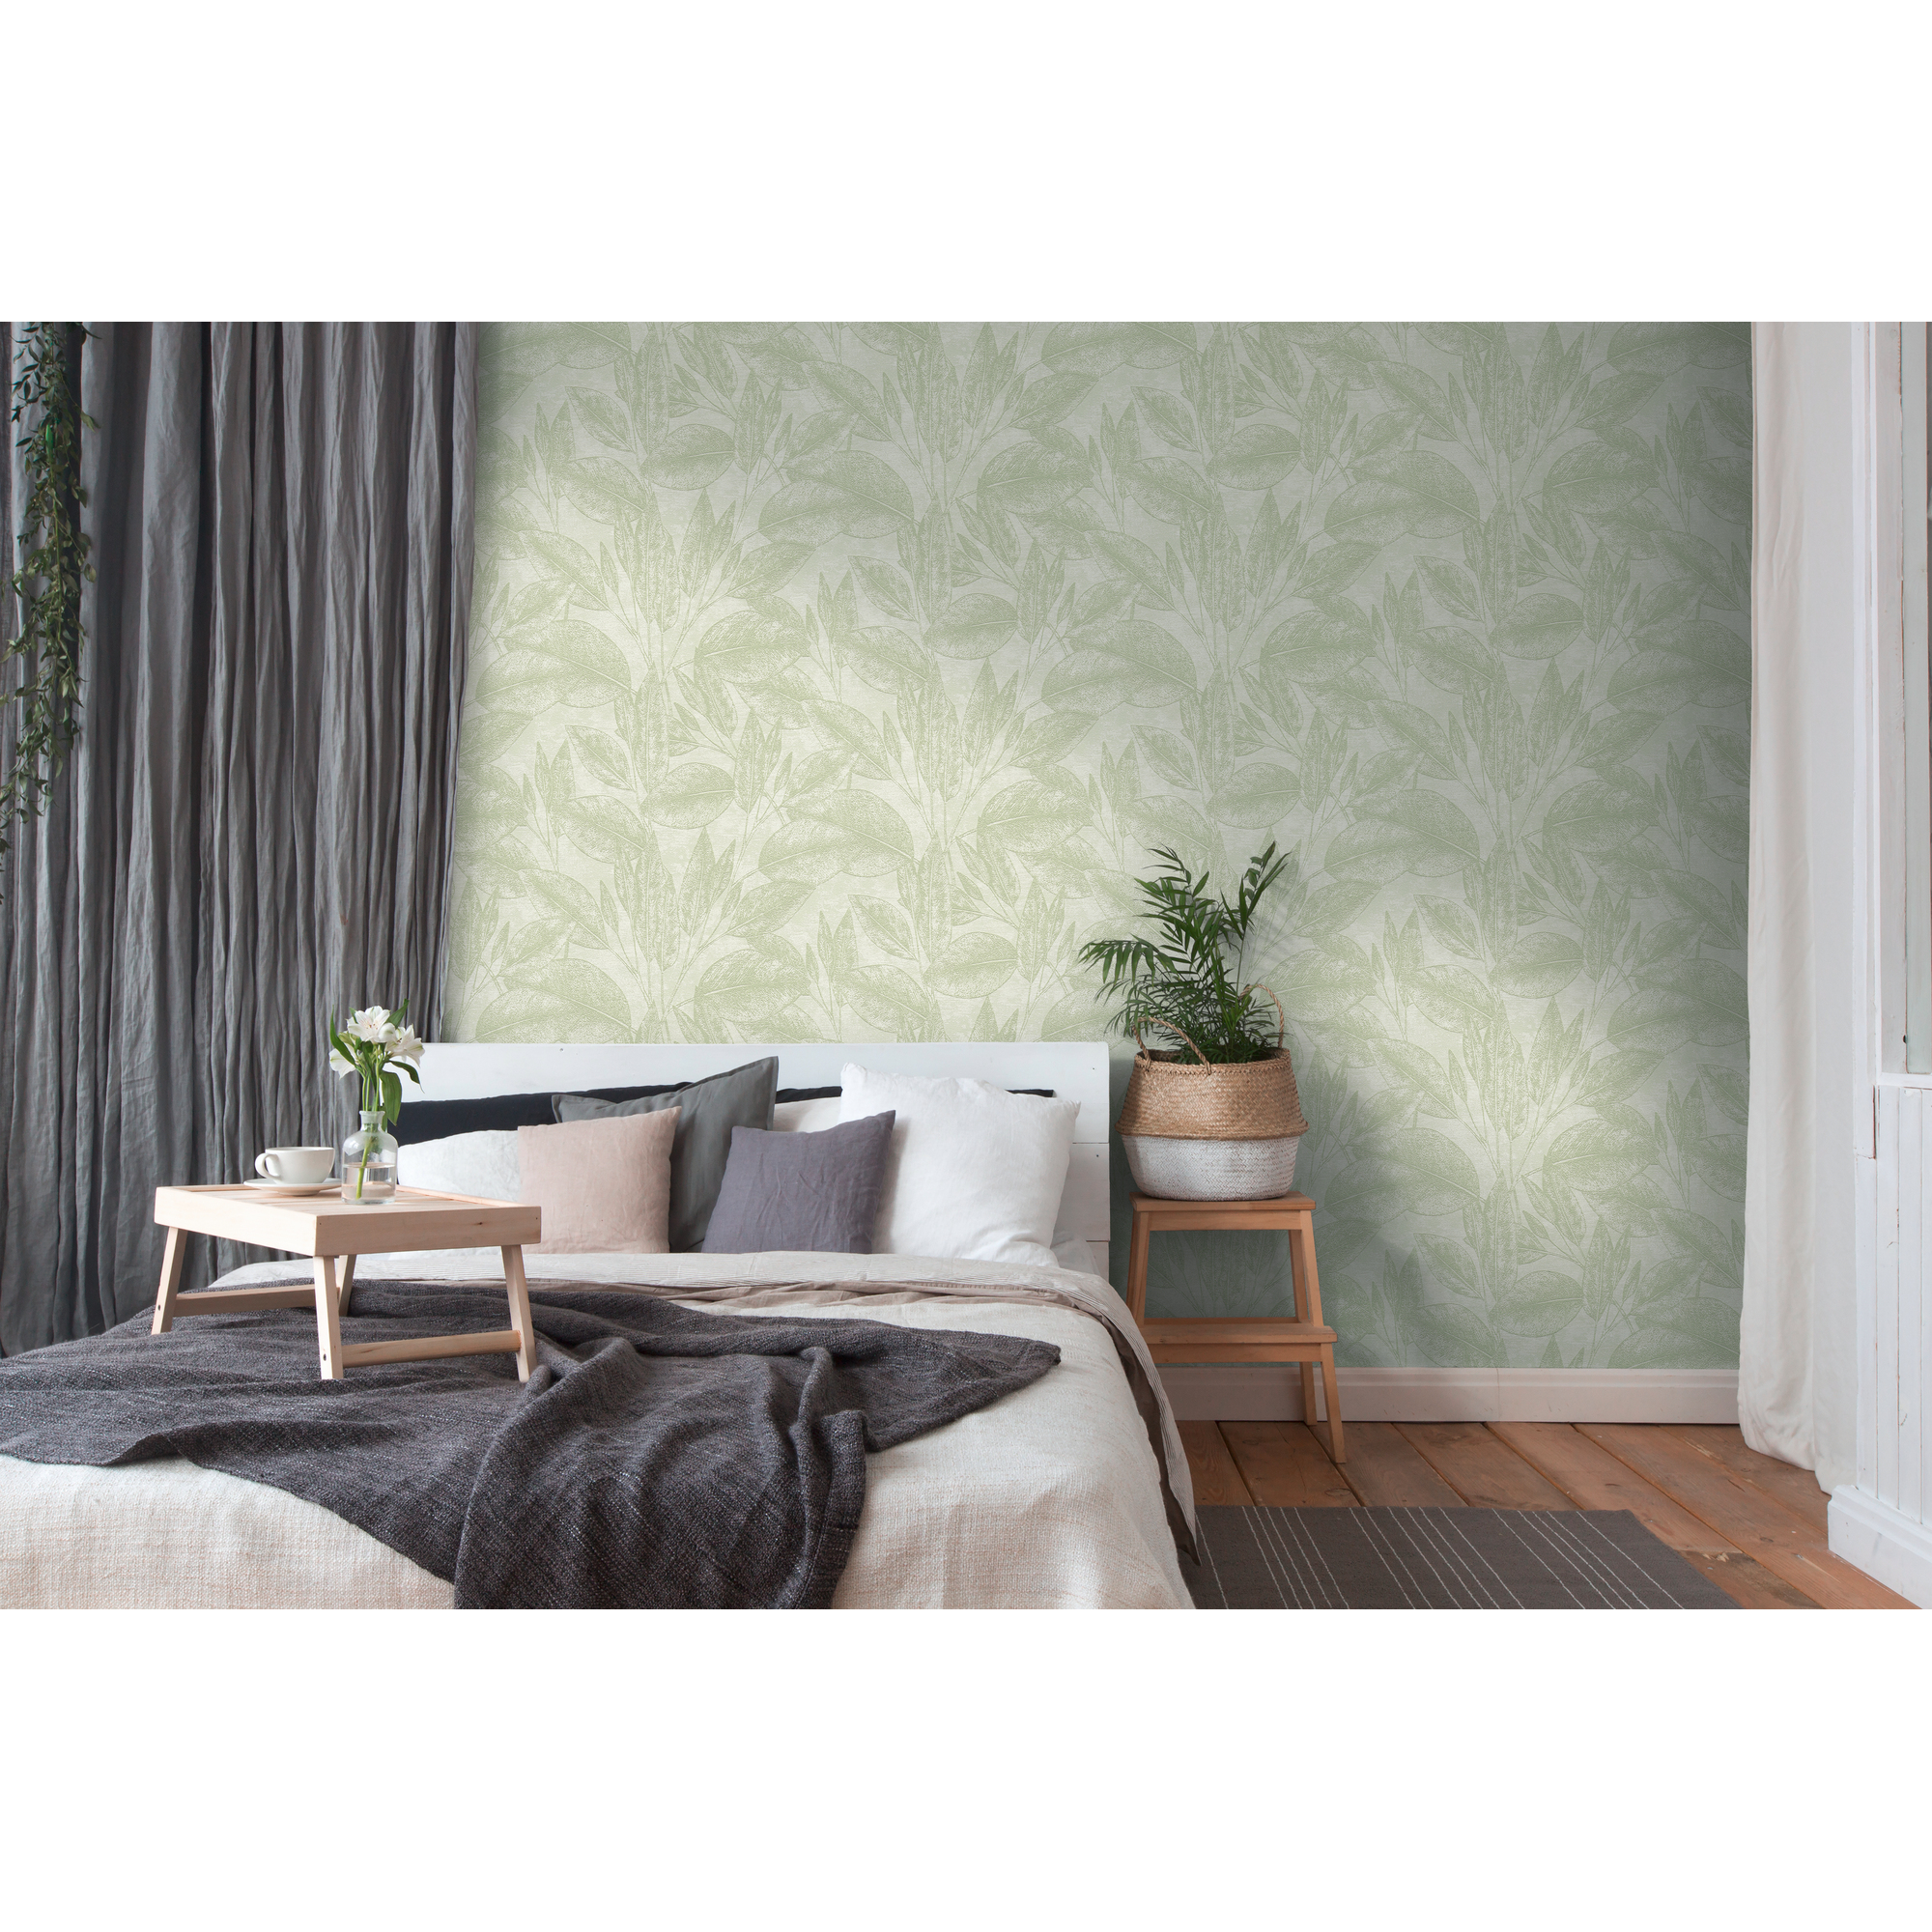 Vliestapete 'Attractive' Blätter grün 53 x 1005 cm + product picture